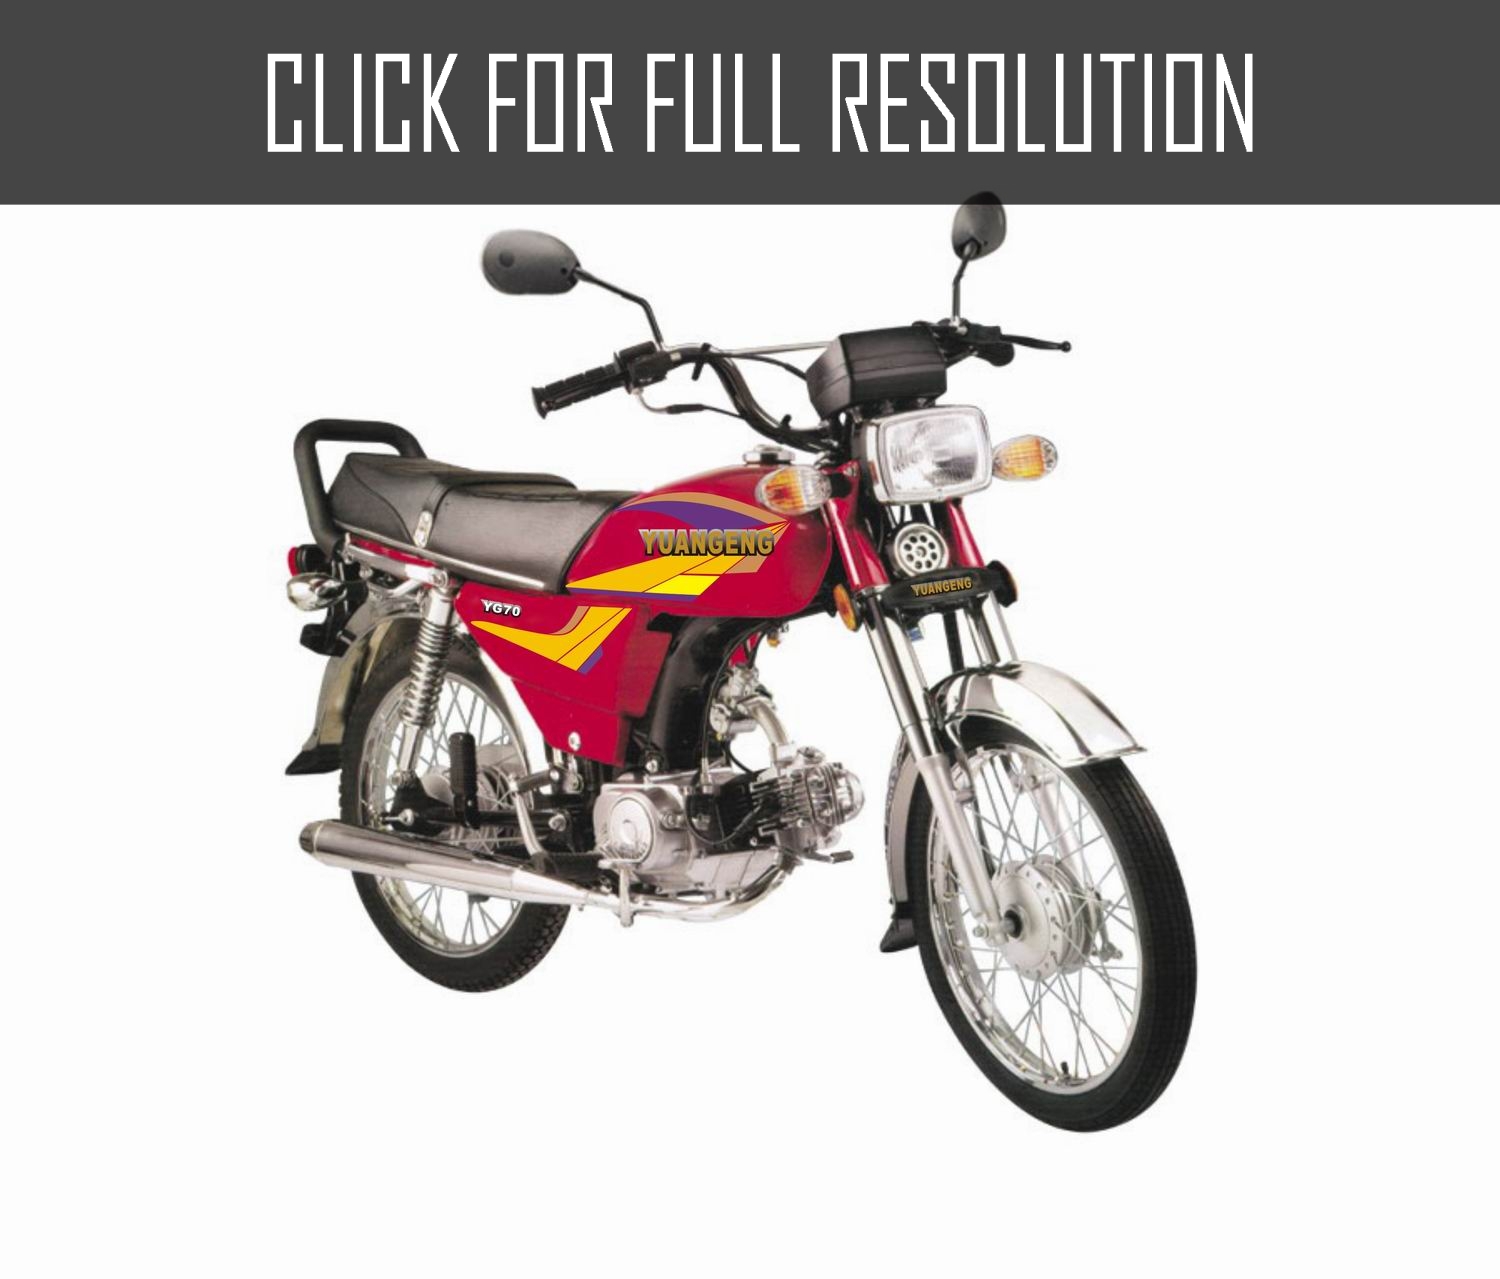 Honda 70 Motorcycle